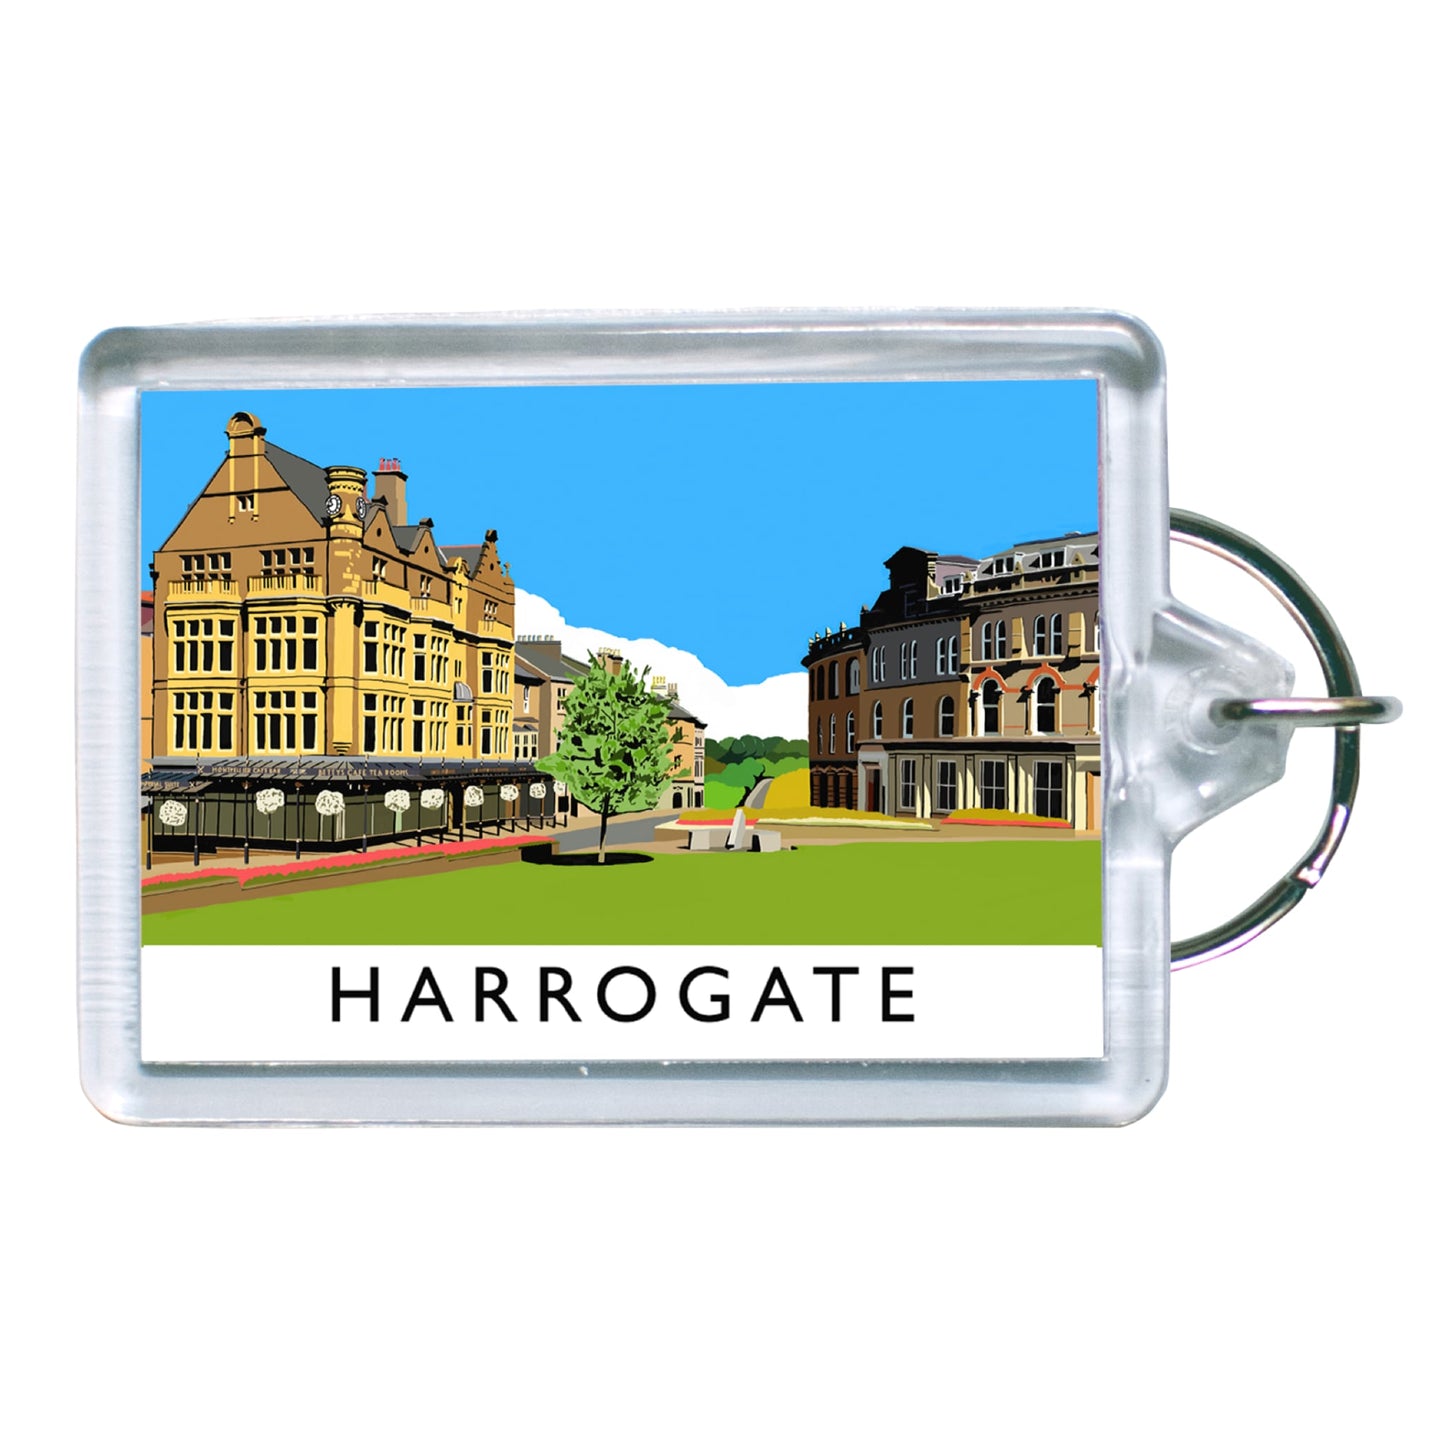 Harrogate Keyring - The Great Yorkshire Shop